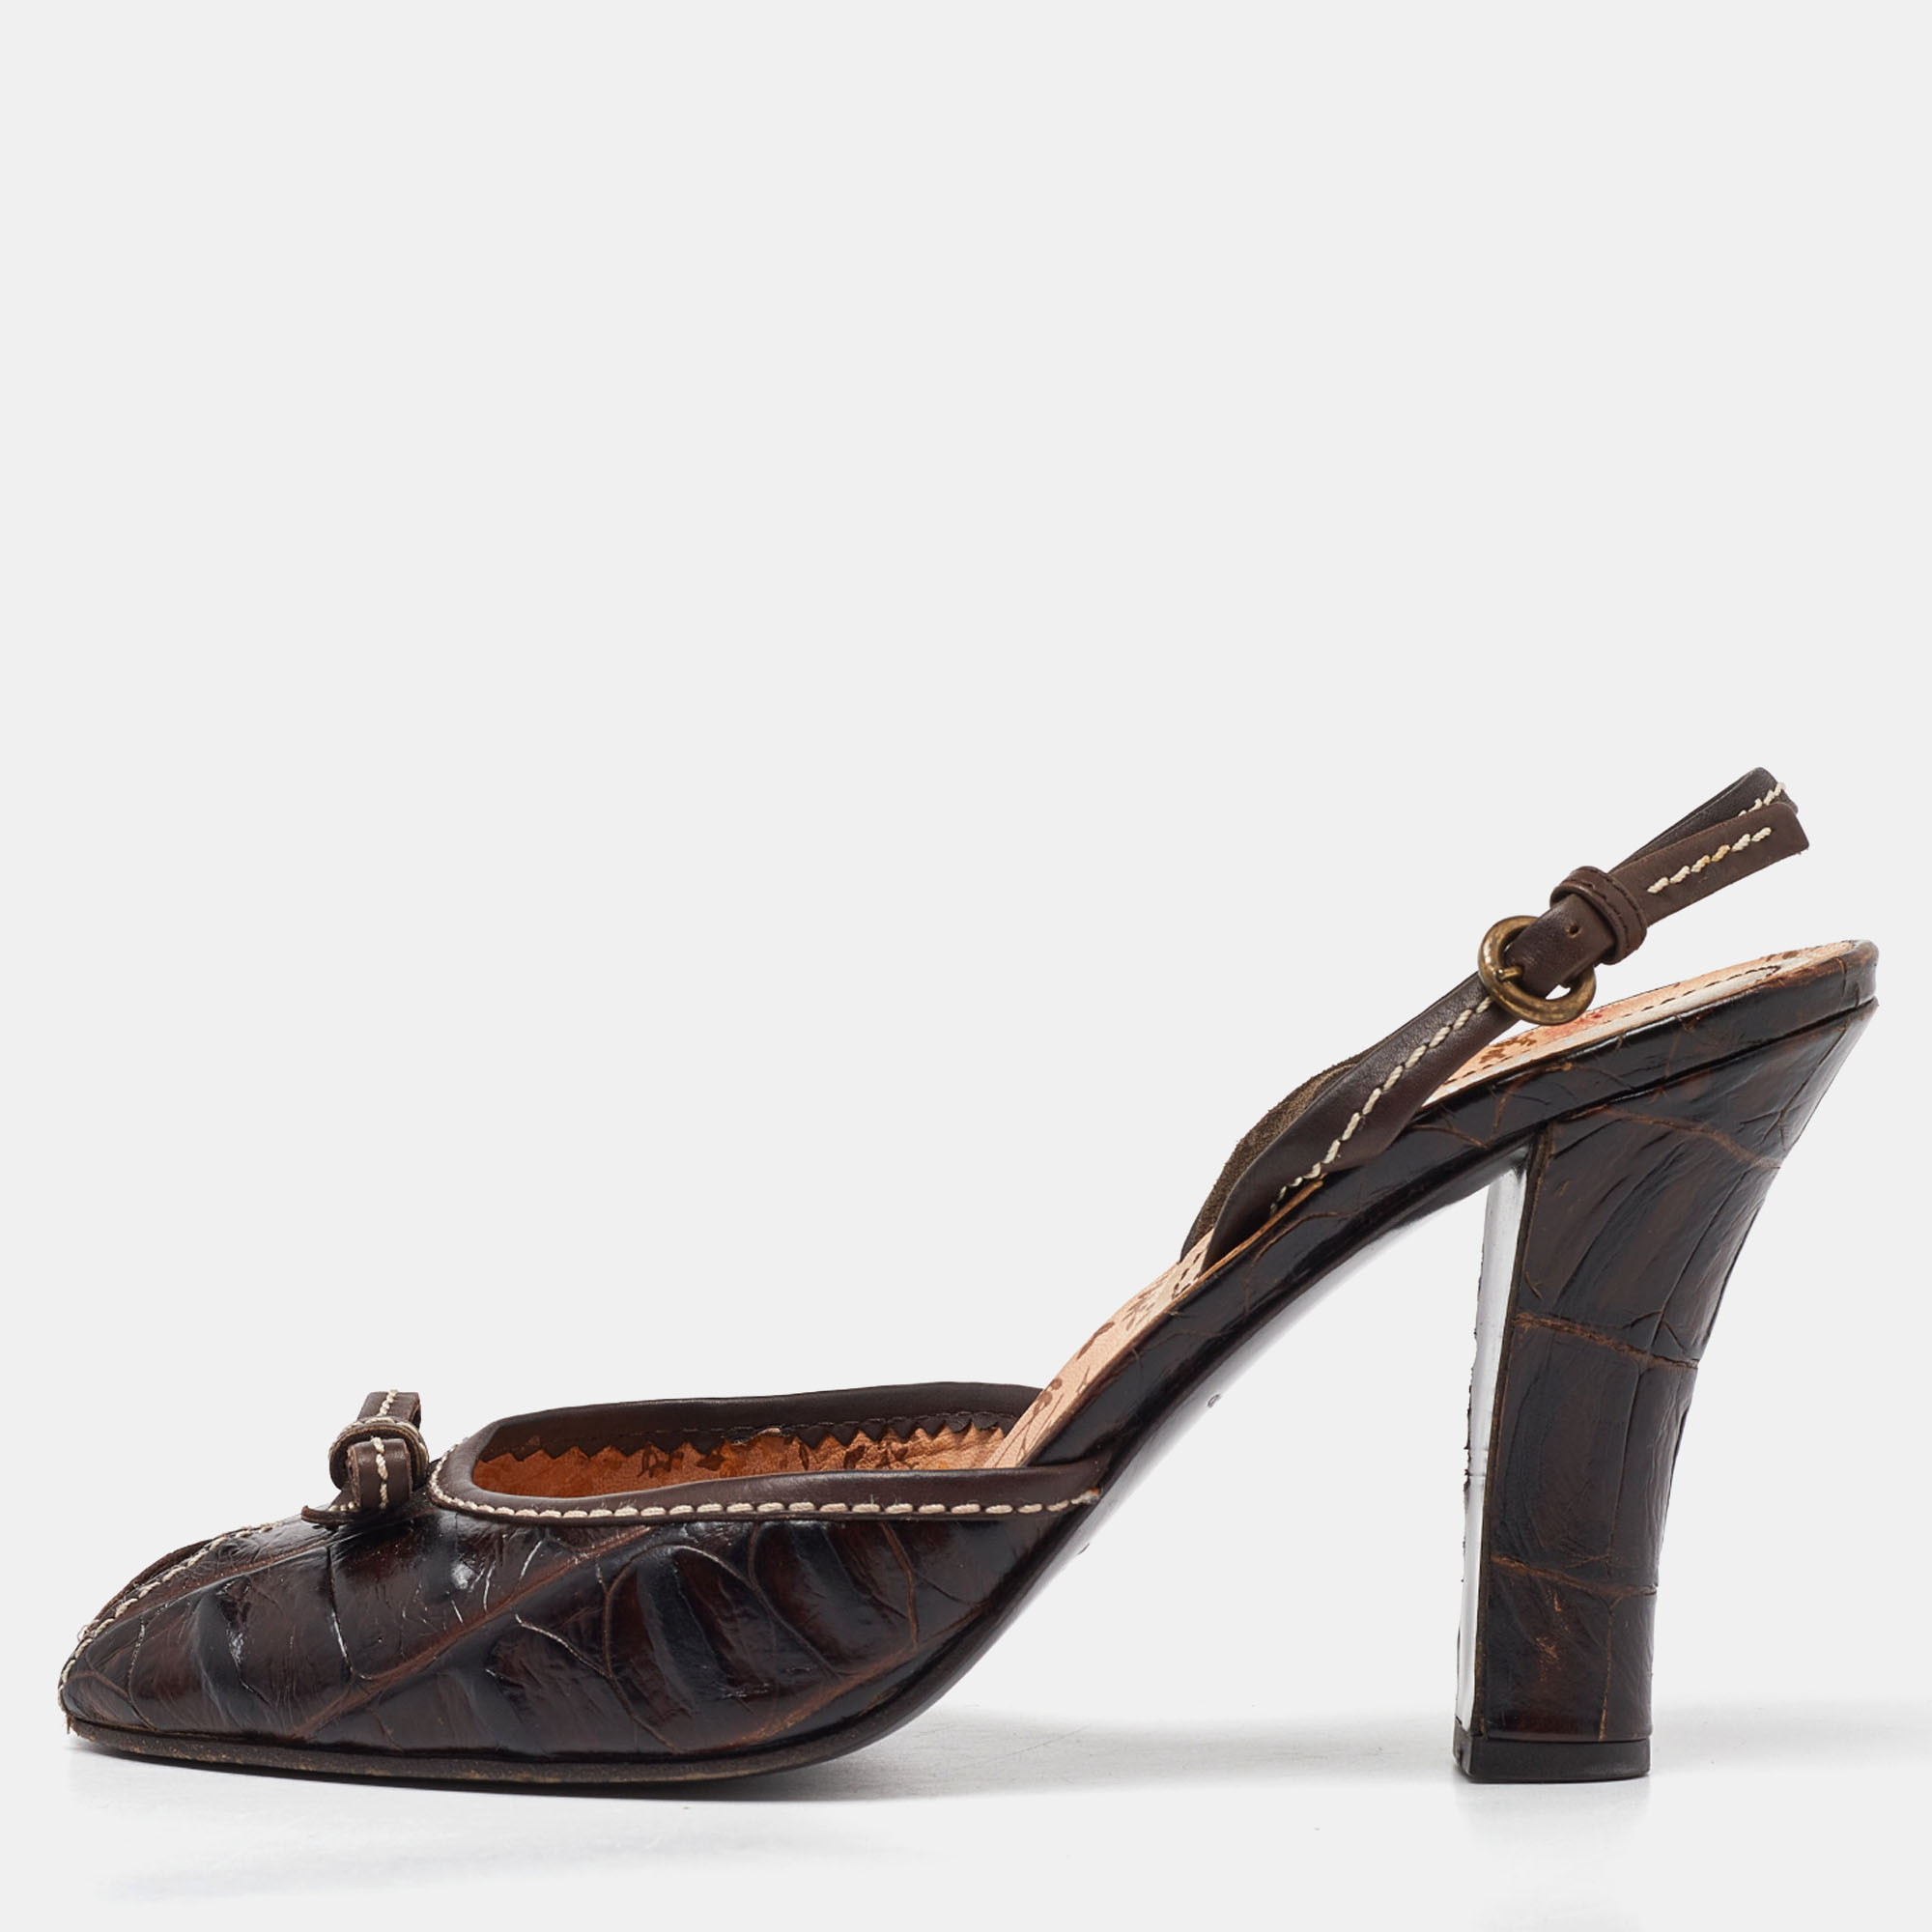 Miu miu dark brown croc embossed leather bow slingback sandals 39